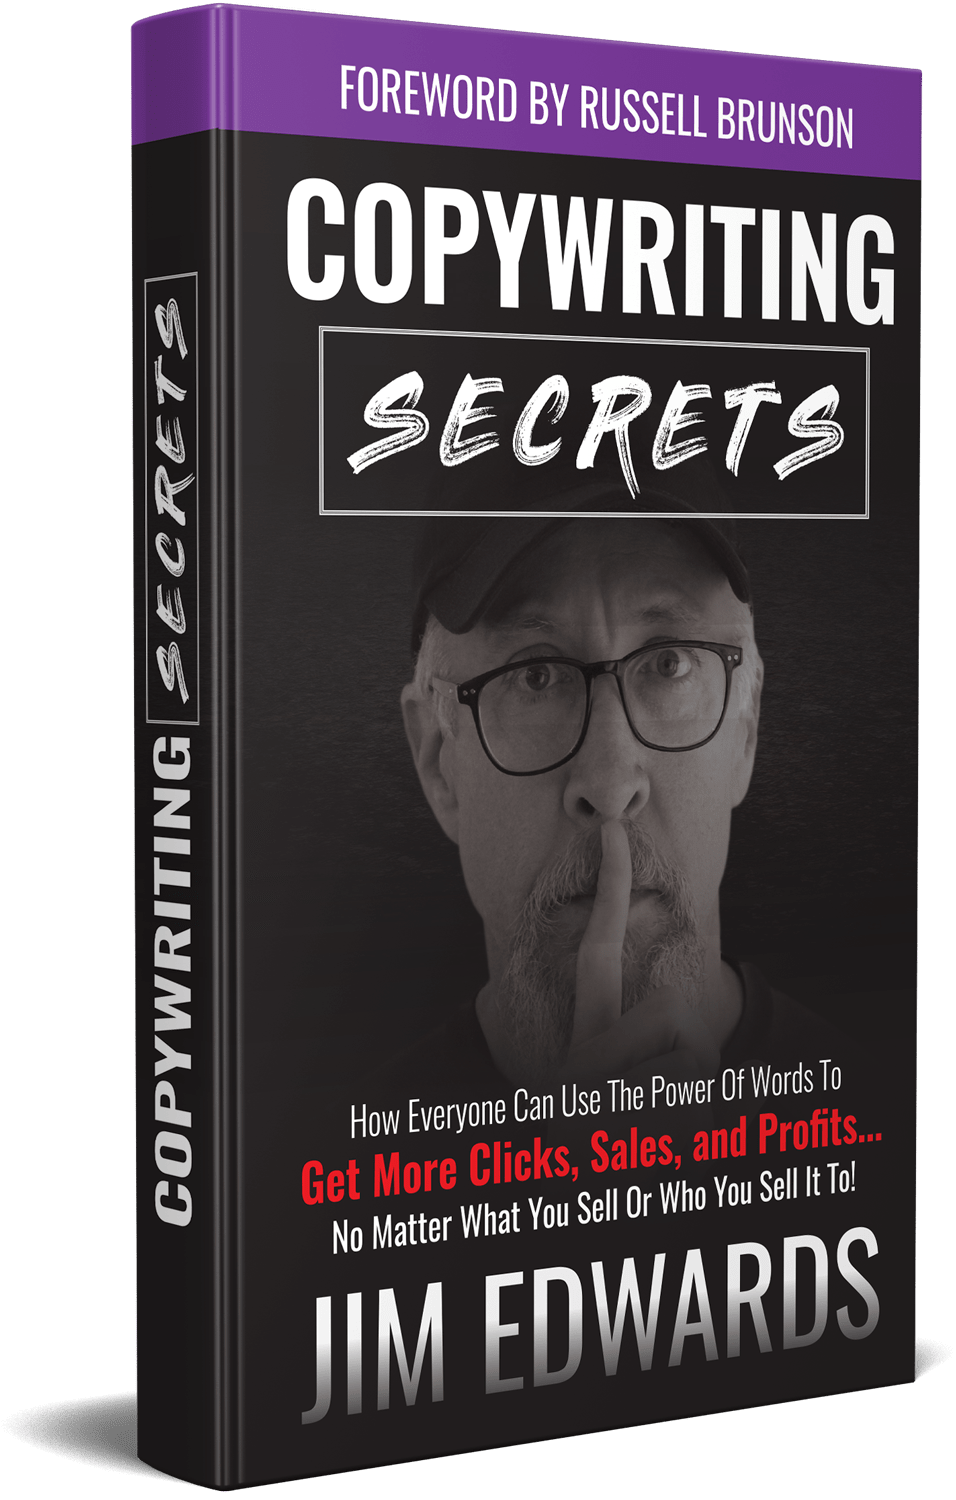 [GET] Jim Edwards – Copywriting Secrets Audiobook Download